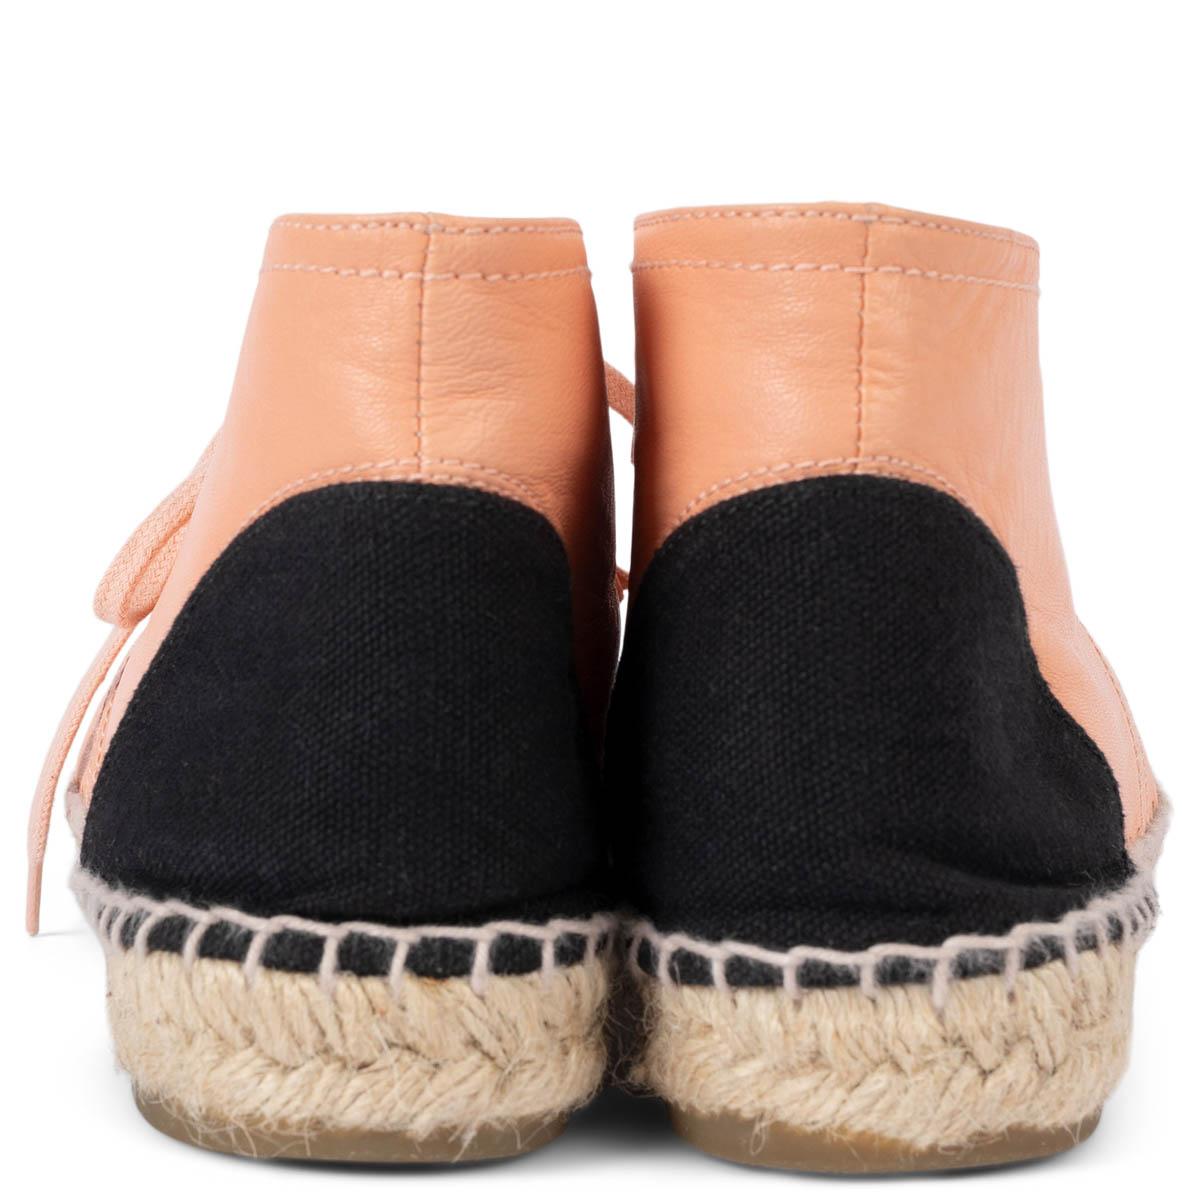 CHANEL salmon pink leather 2015 15C DUBAI ESPADRILLE Flats Shoes 37 fit 36.5 For Sale 1